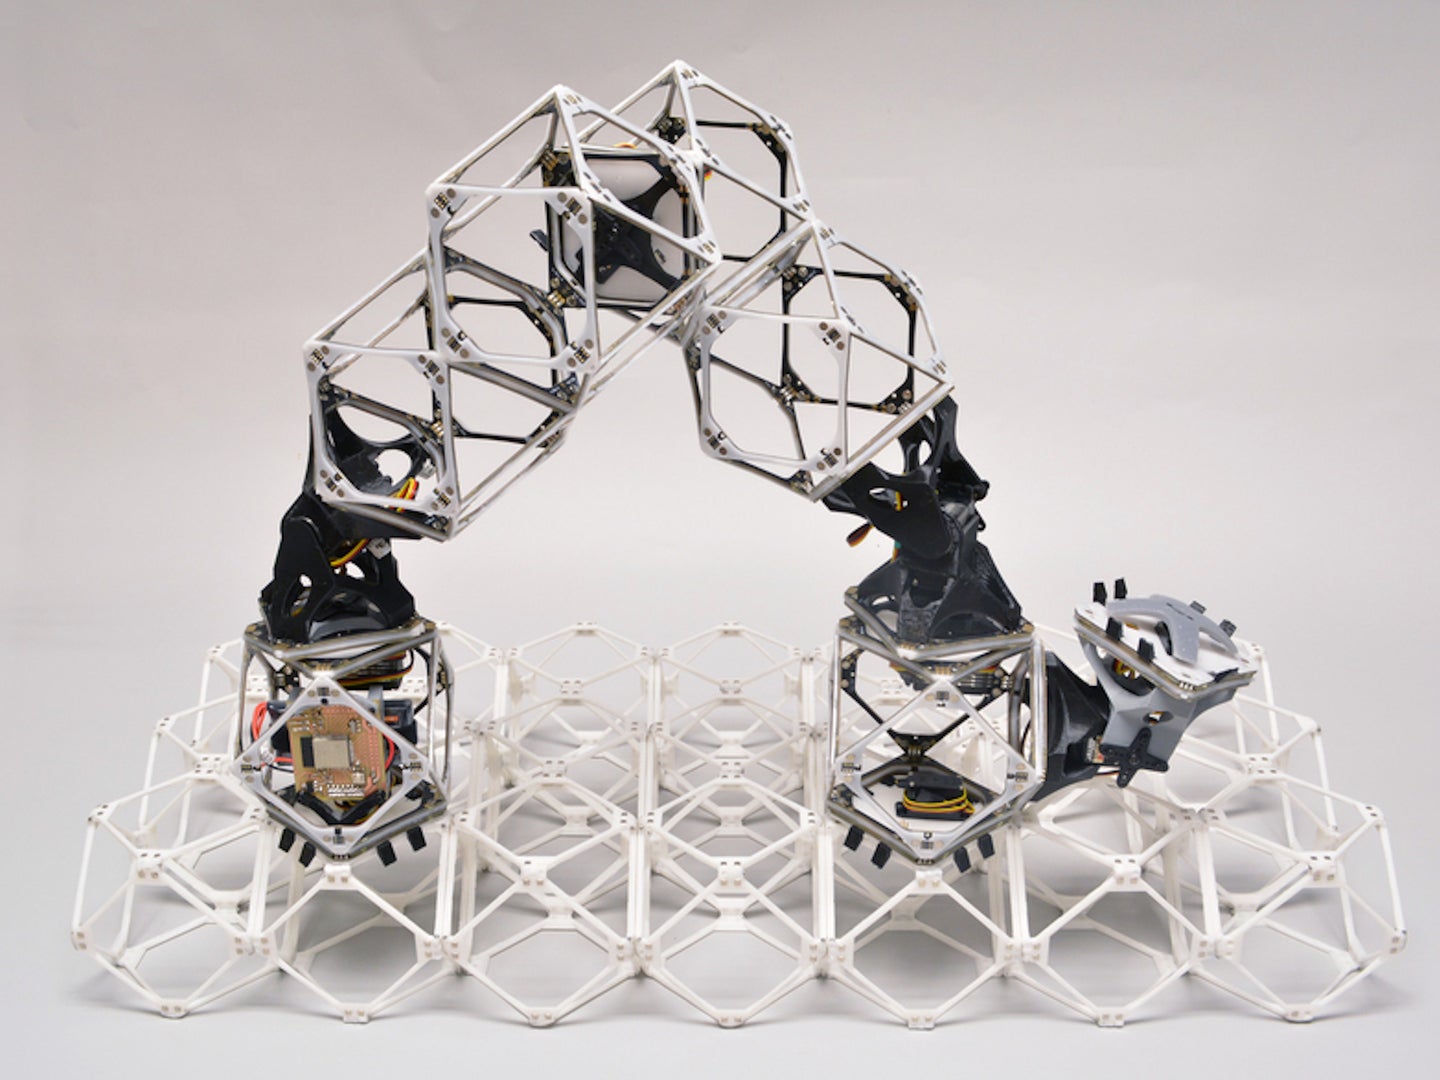 MIT swarm robots constructing object using voxel building blocks